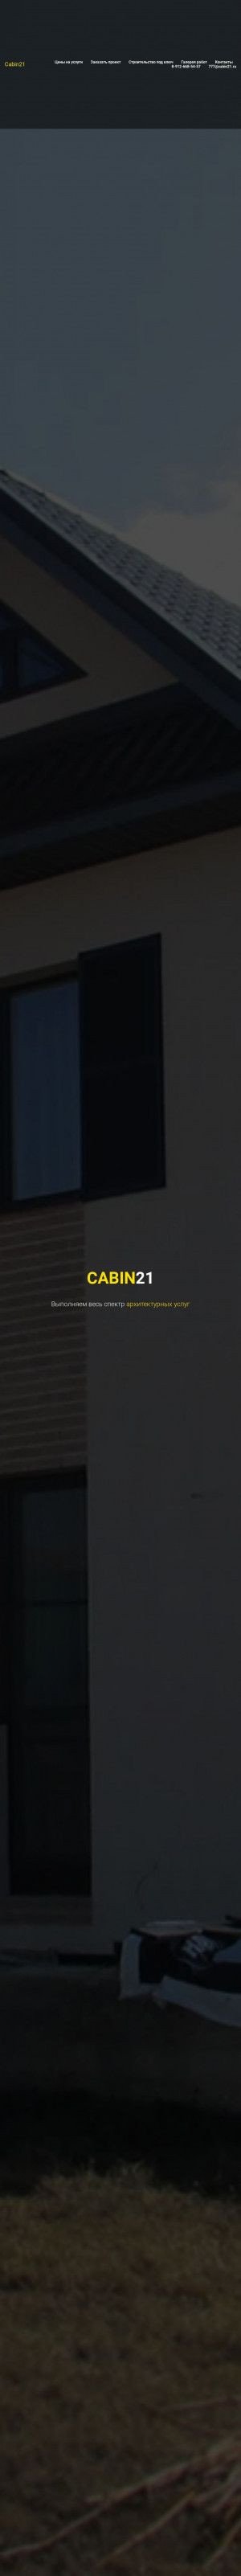 Предпросмотр для cabin21.ru — Архитектурная студия Cabin21